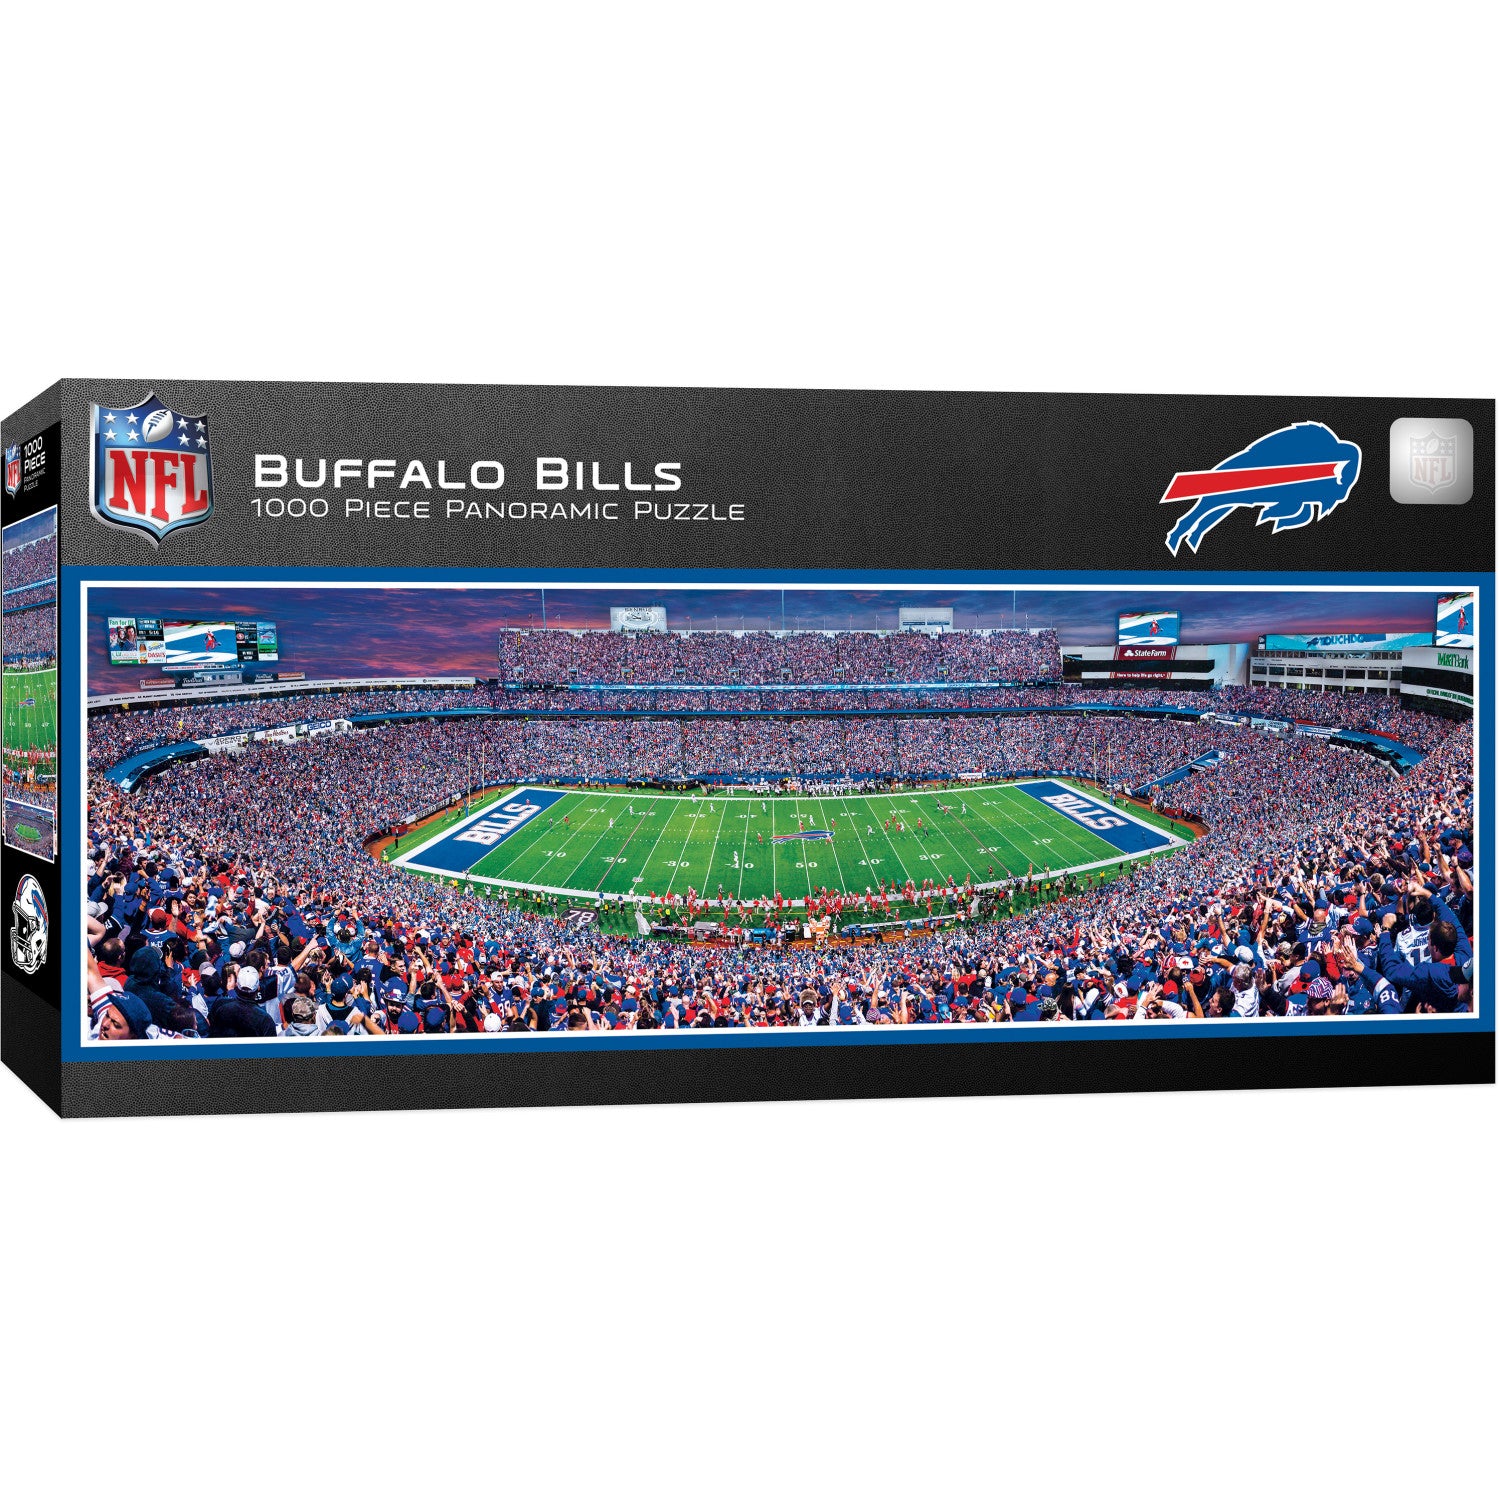 Buffalo Bills - 1000 Piece Panoramic Jigsaw Puzzle - Center View